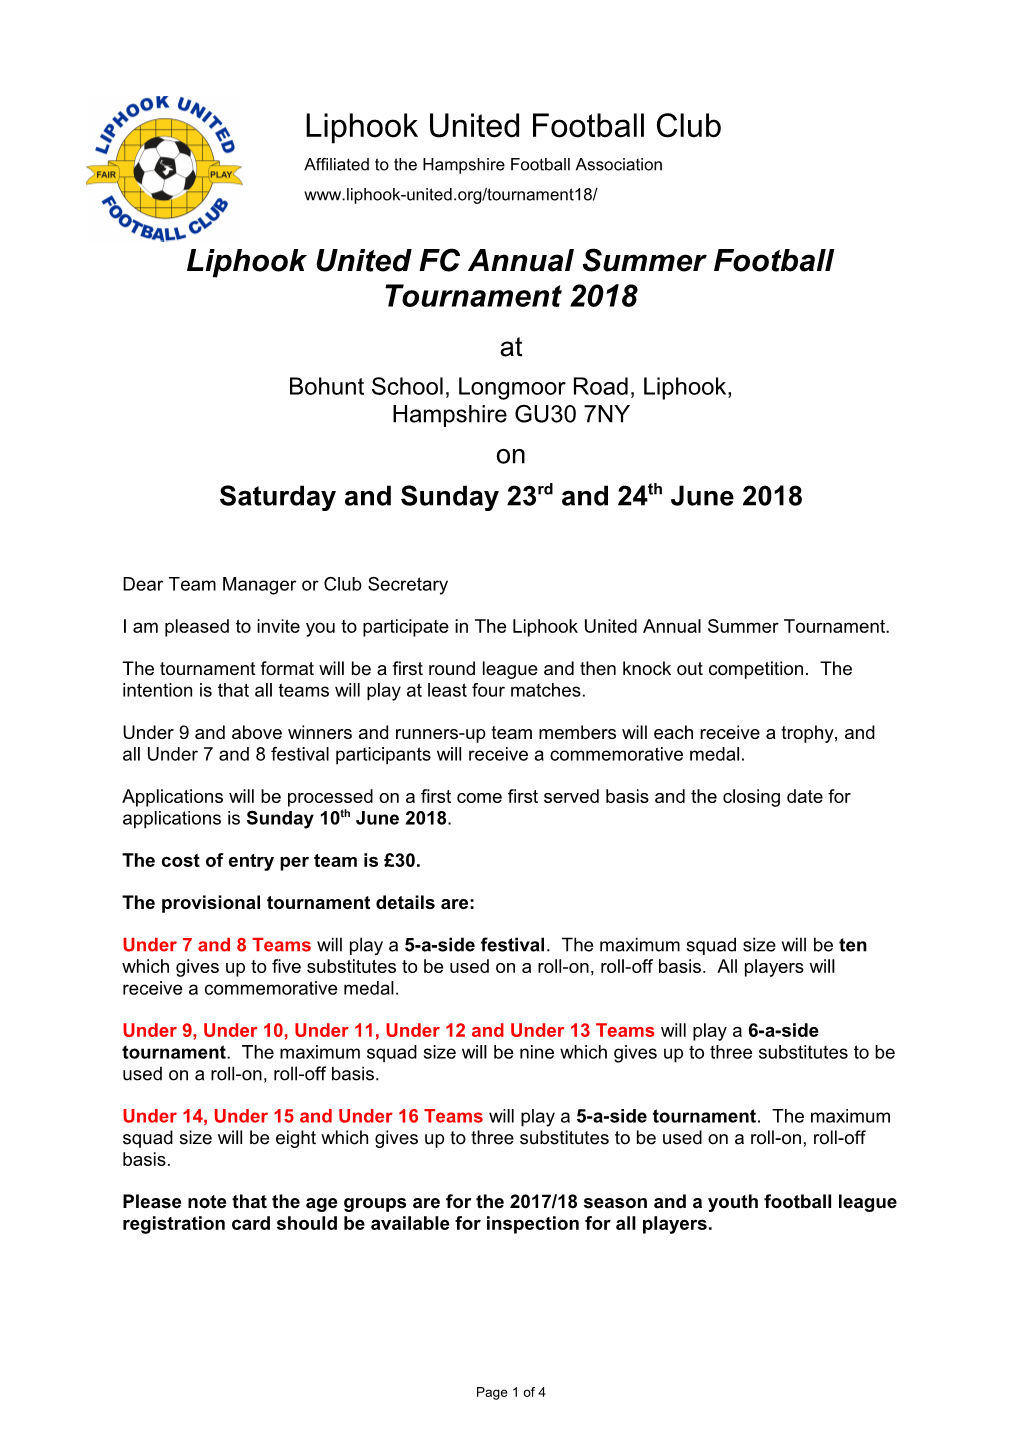 LUFC Tournament Invitation